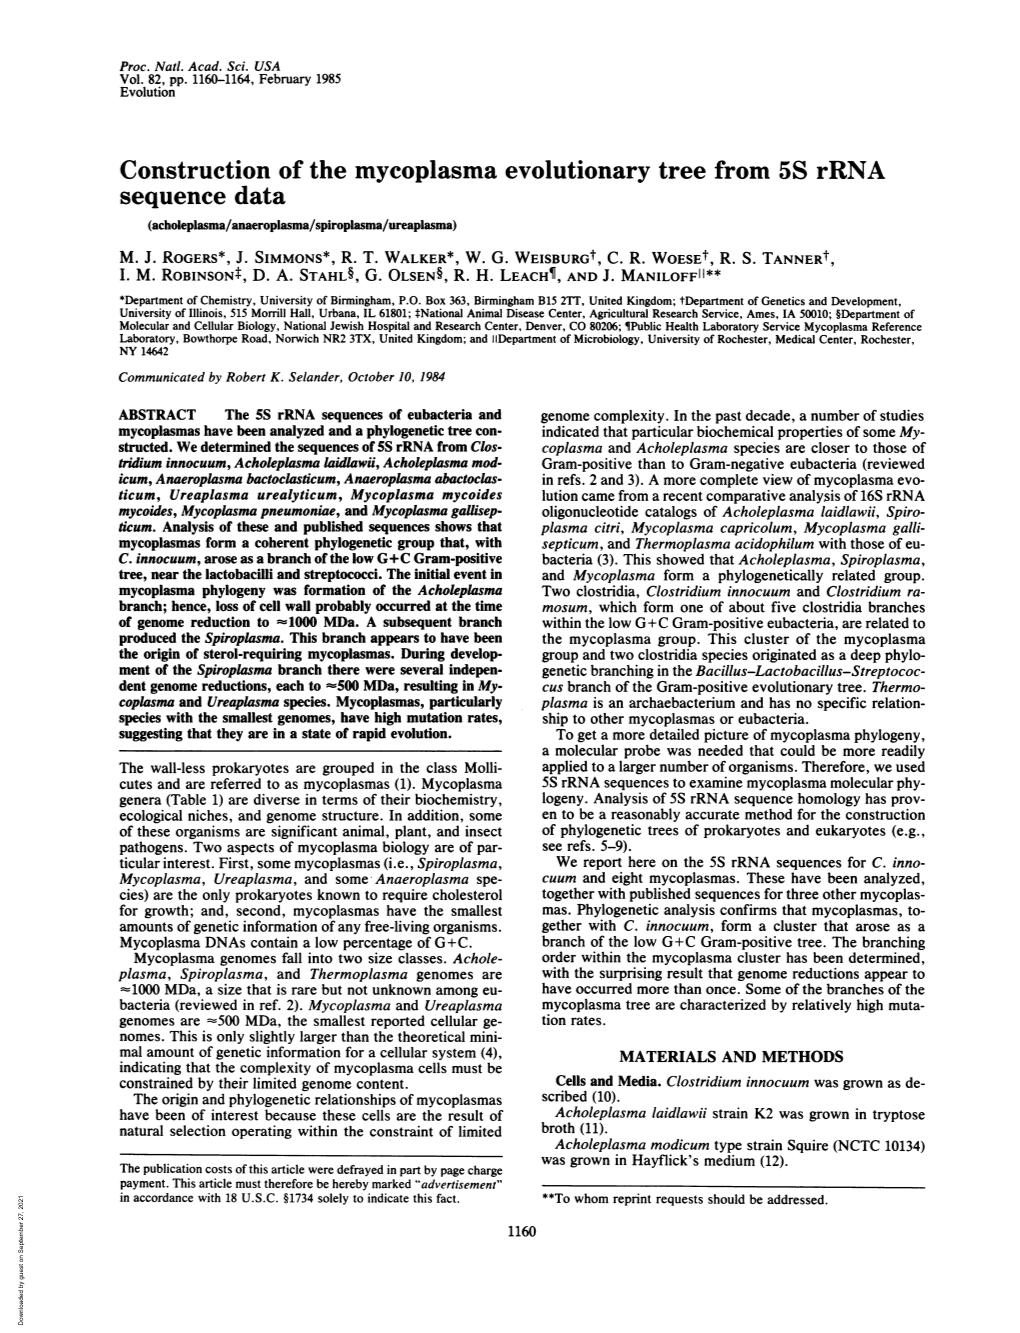 Construction of the Mycoplasma Evolutionary Tree from 5S Rrna Sequence Data (Acholeplasma/Anaeroplasma/Spiroplasma/Ureaplasma) M